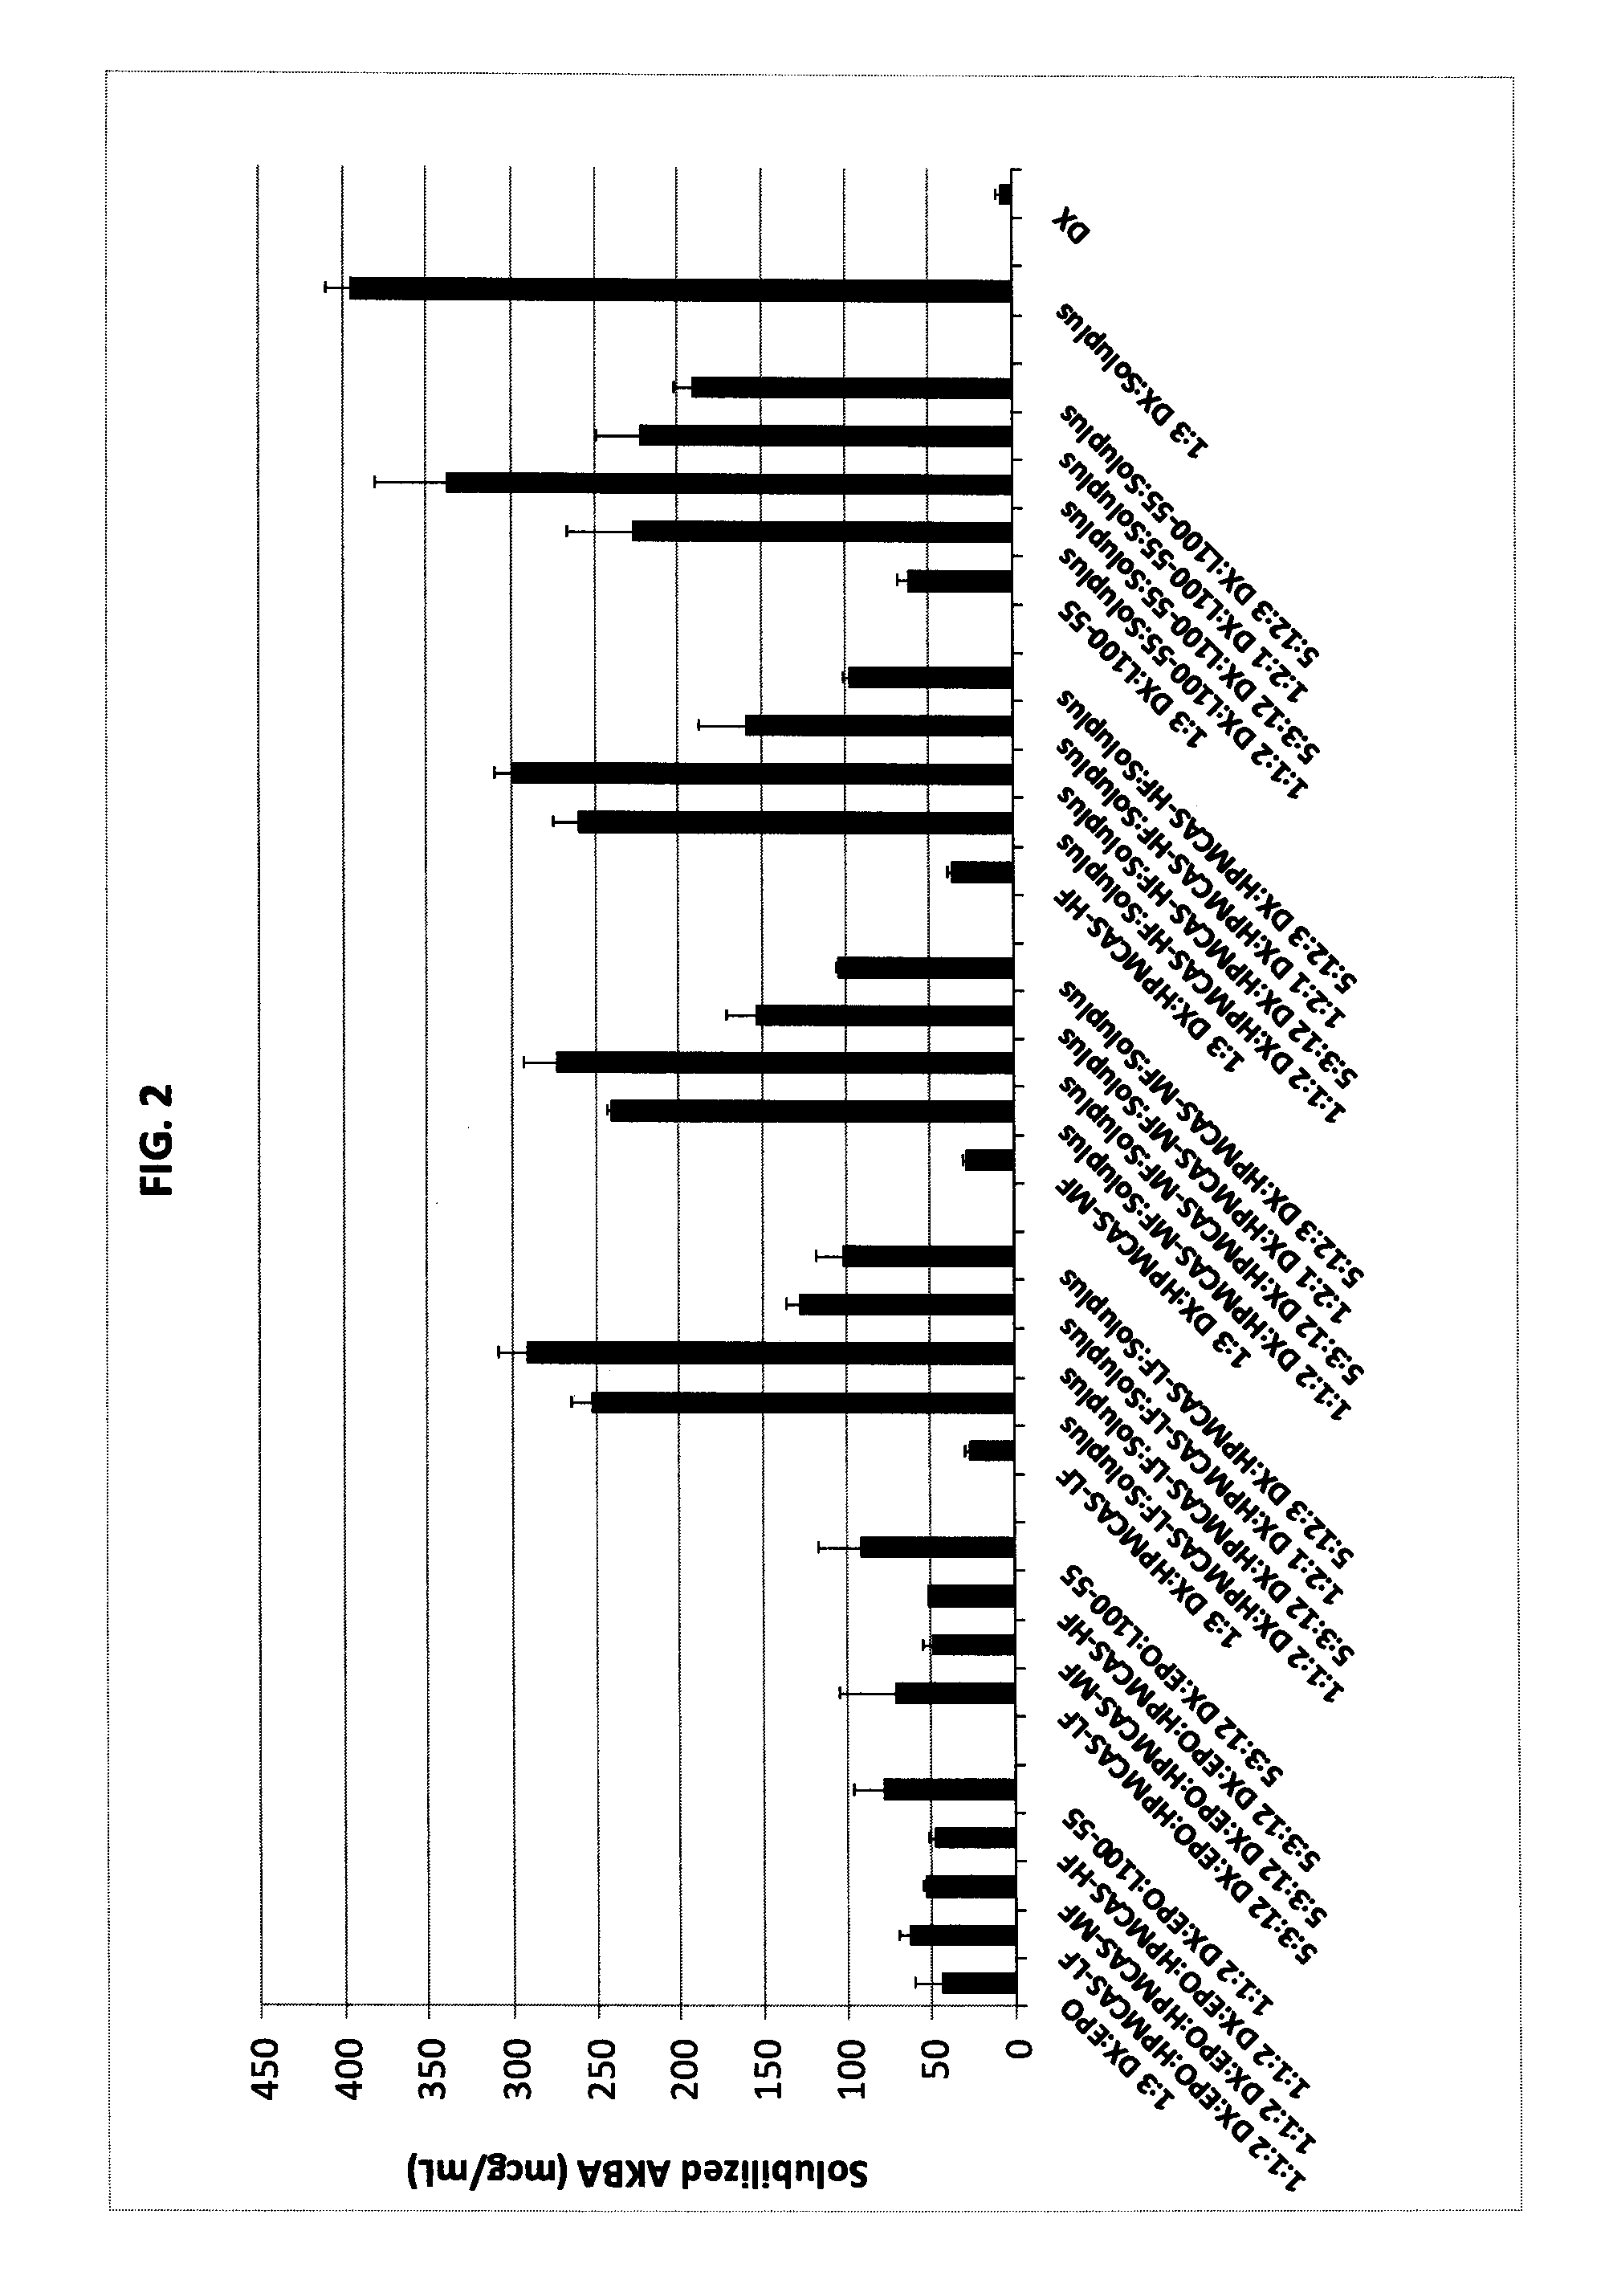 Pharmaceutical formulations of acetyl-11-keto-b-boswellic acid, diindolylmethane, and curcumin for pharmaceutical applications